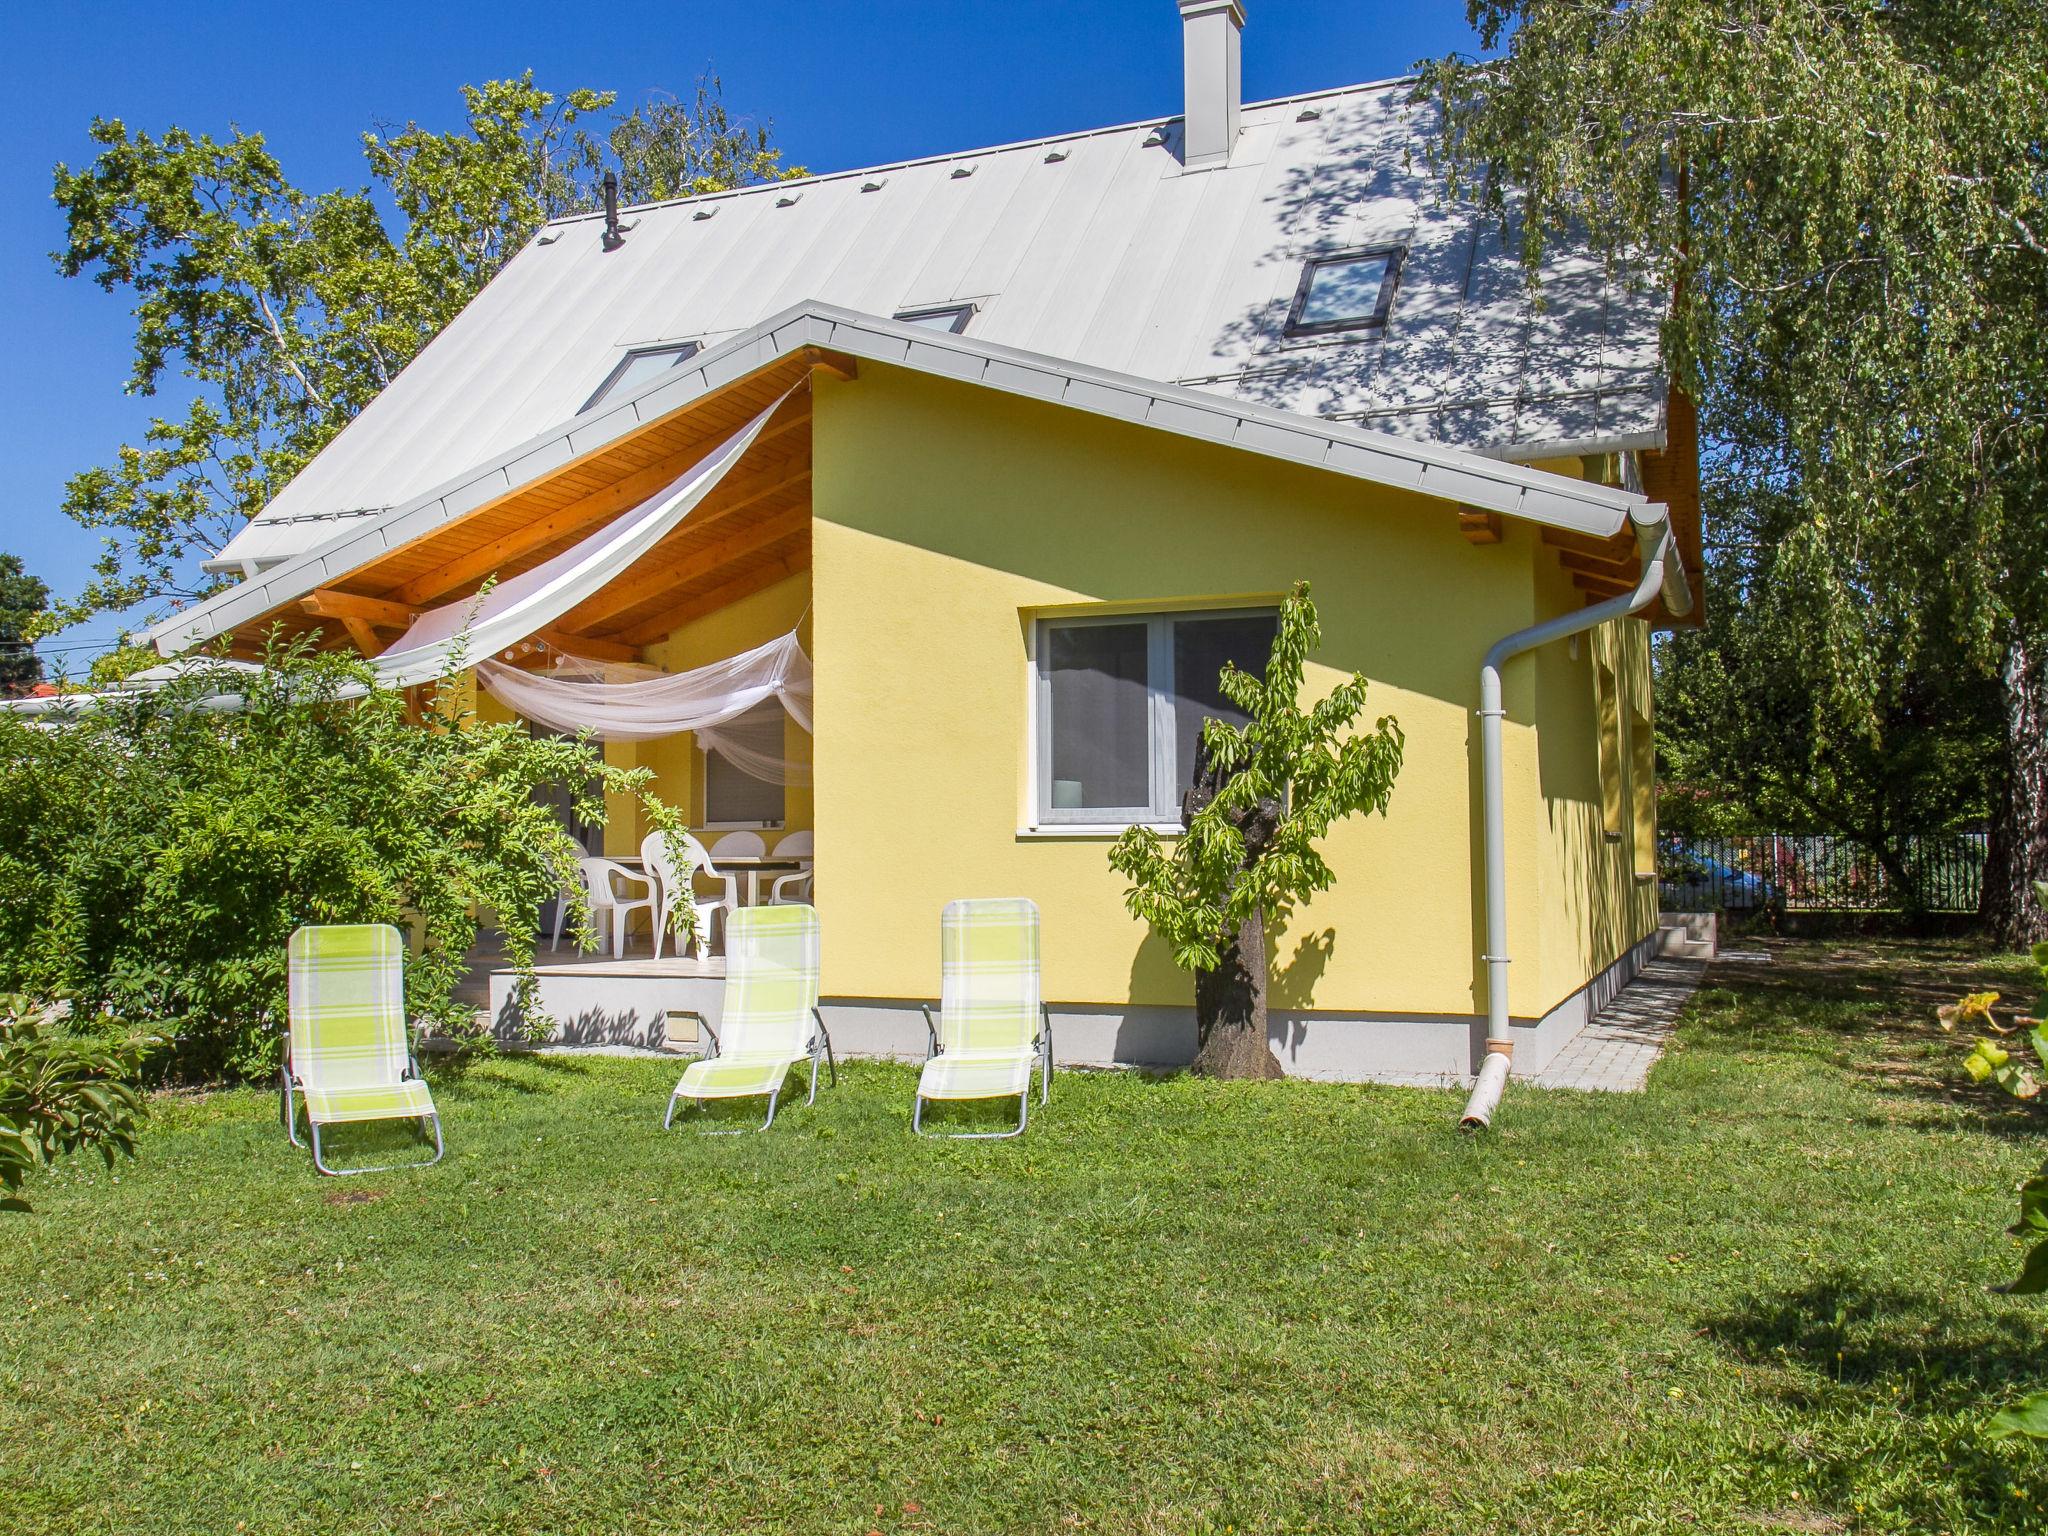 Foto 1 - Casa con 4 camere da letto a Balatonberény con giardino e terrazza